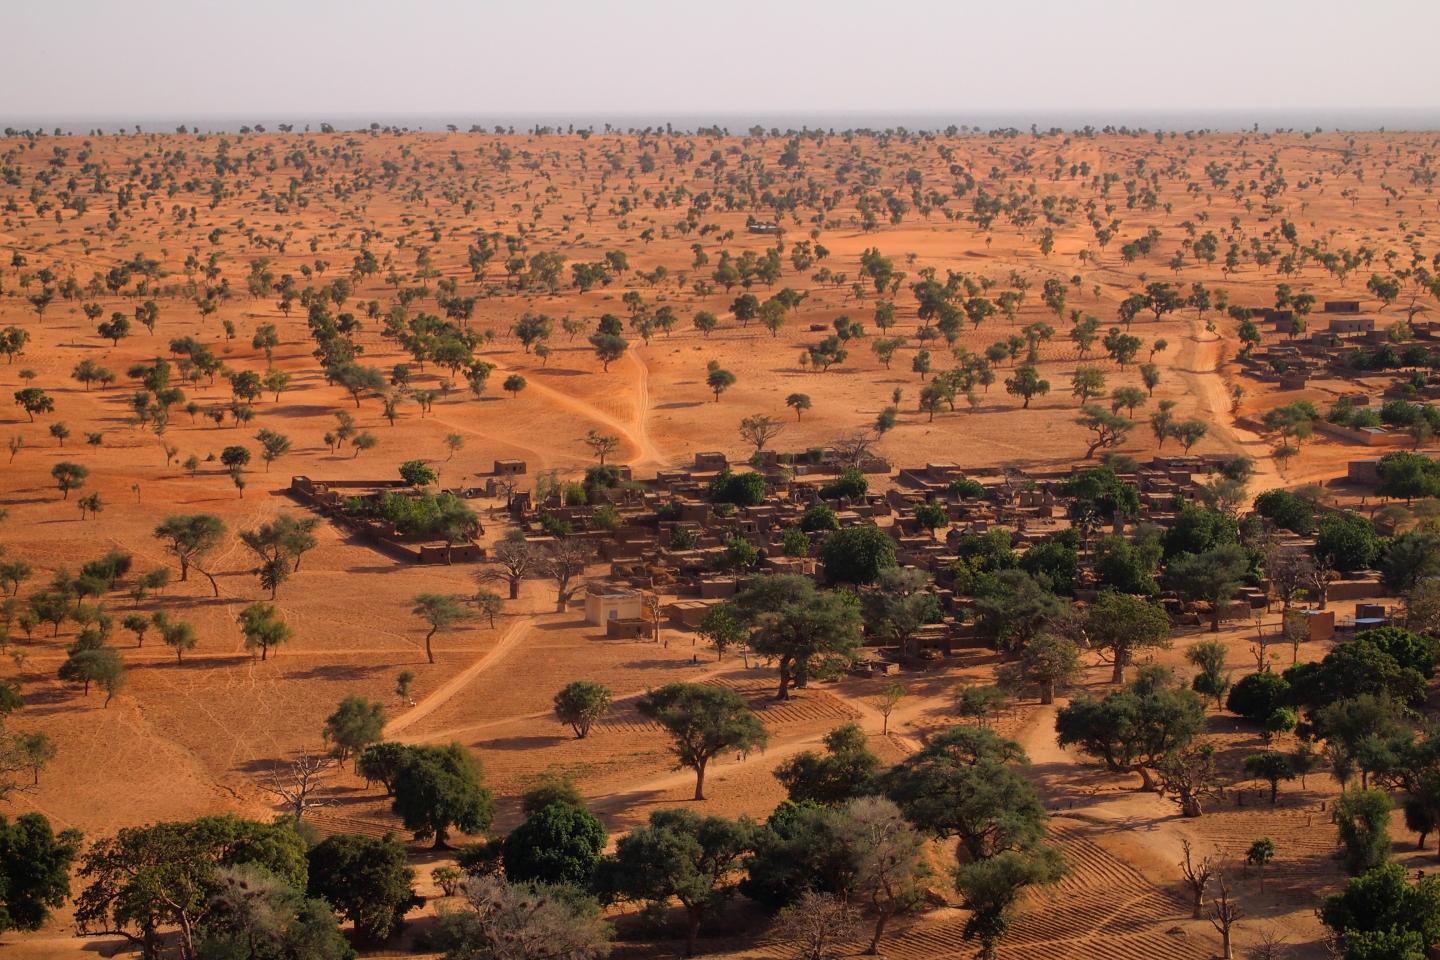 Dryland landscape in West Africa. Source: Martin Brandt